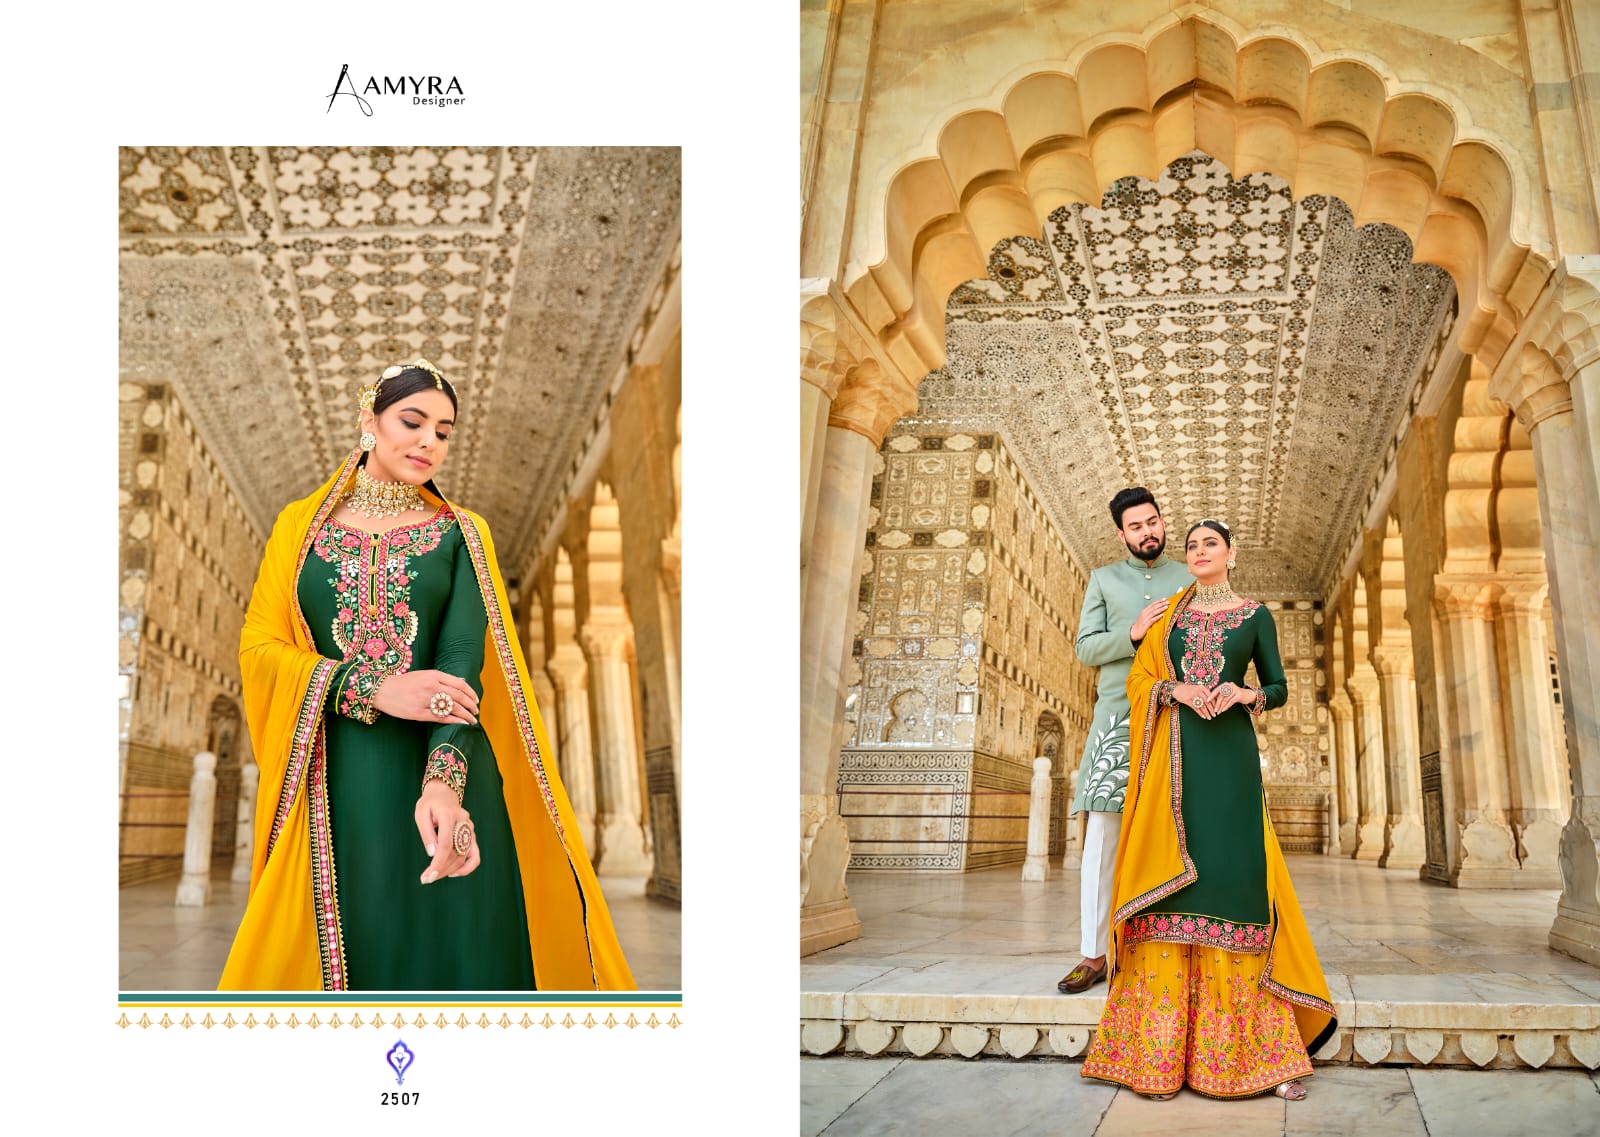 Amyra Gharana Vol 2 Exclusive Wear Designer Salwar Suits Catalog